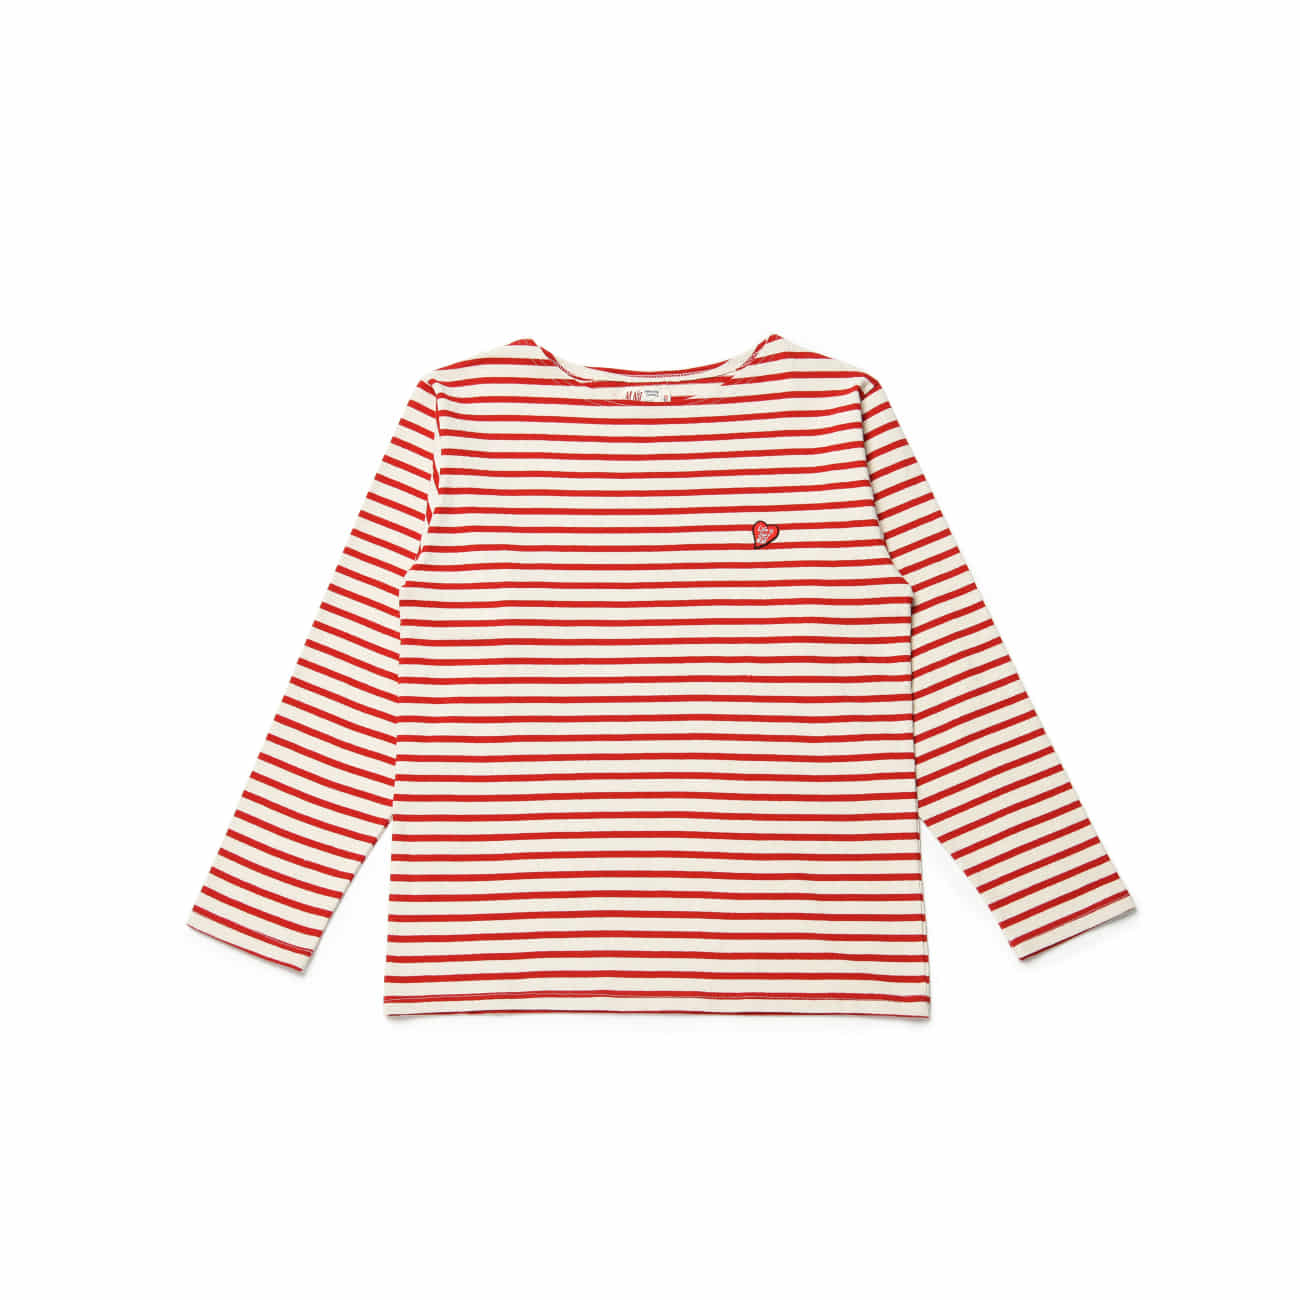 1950’s Stripe T-Shirt